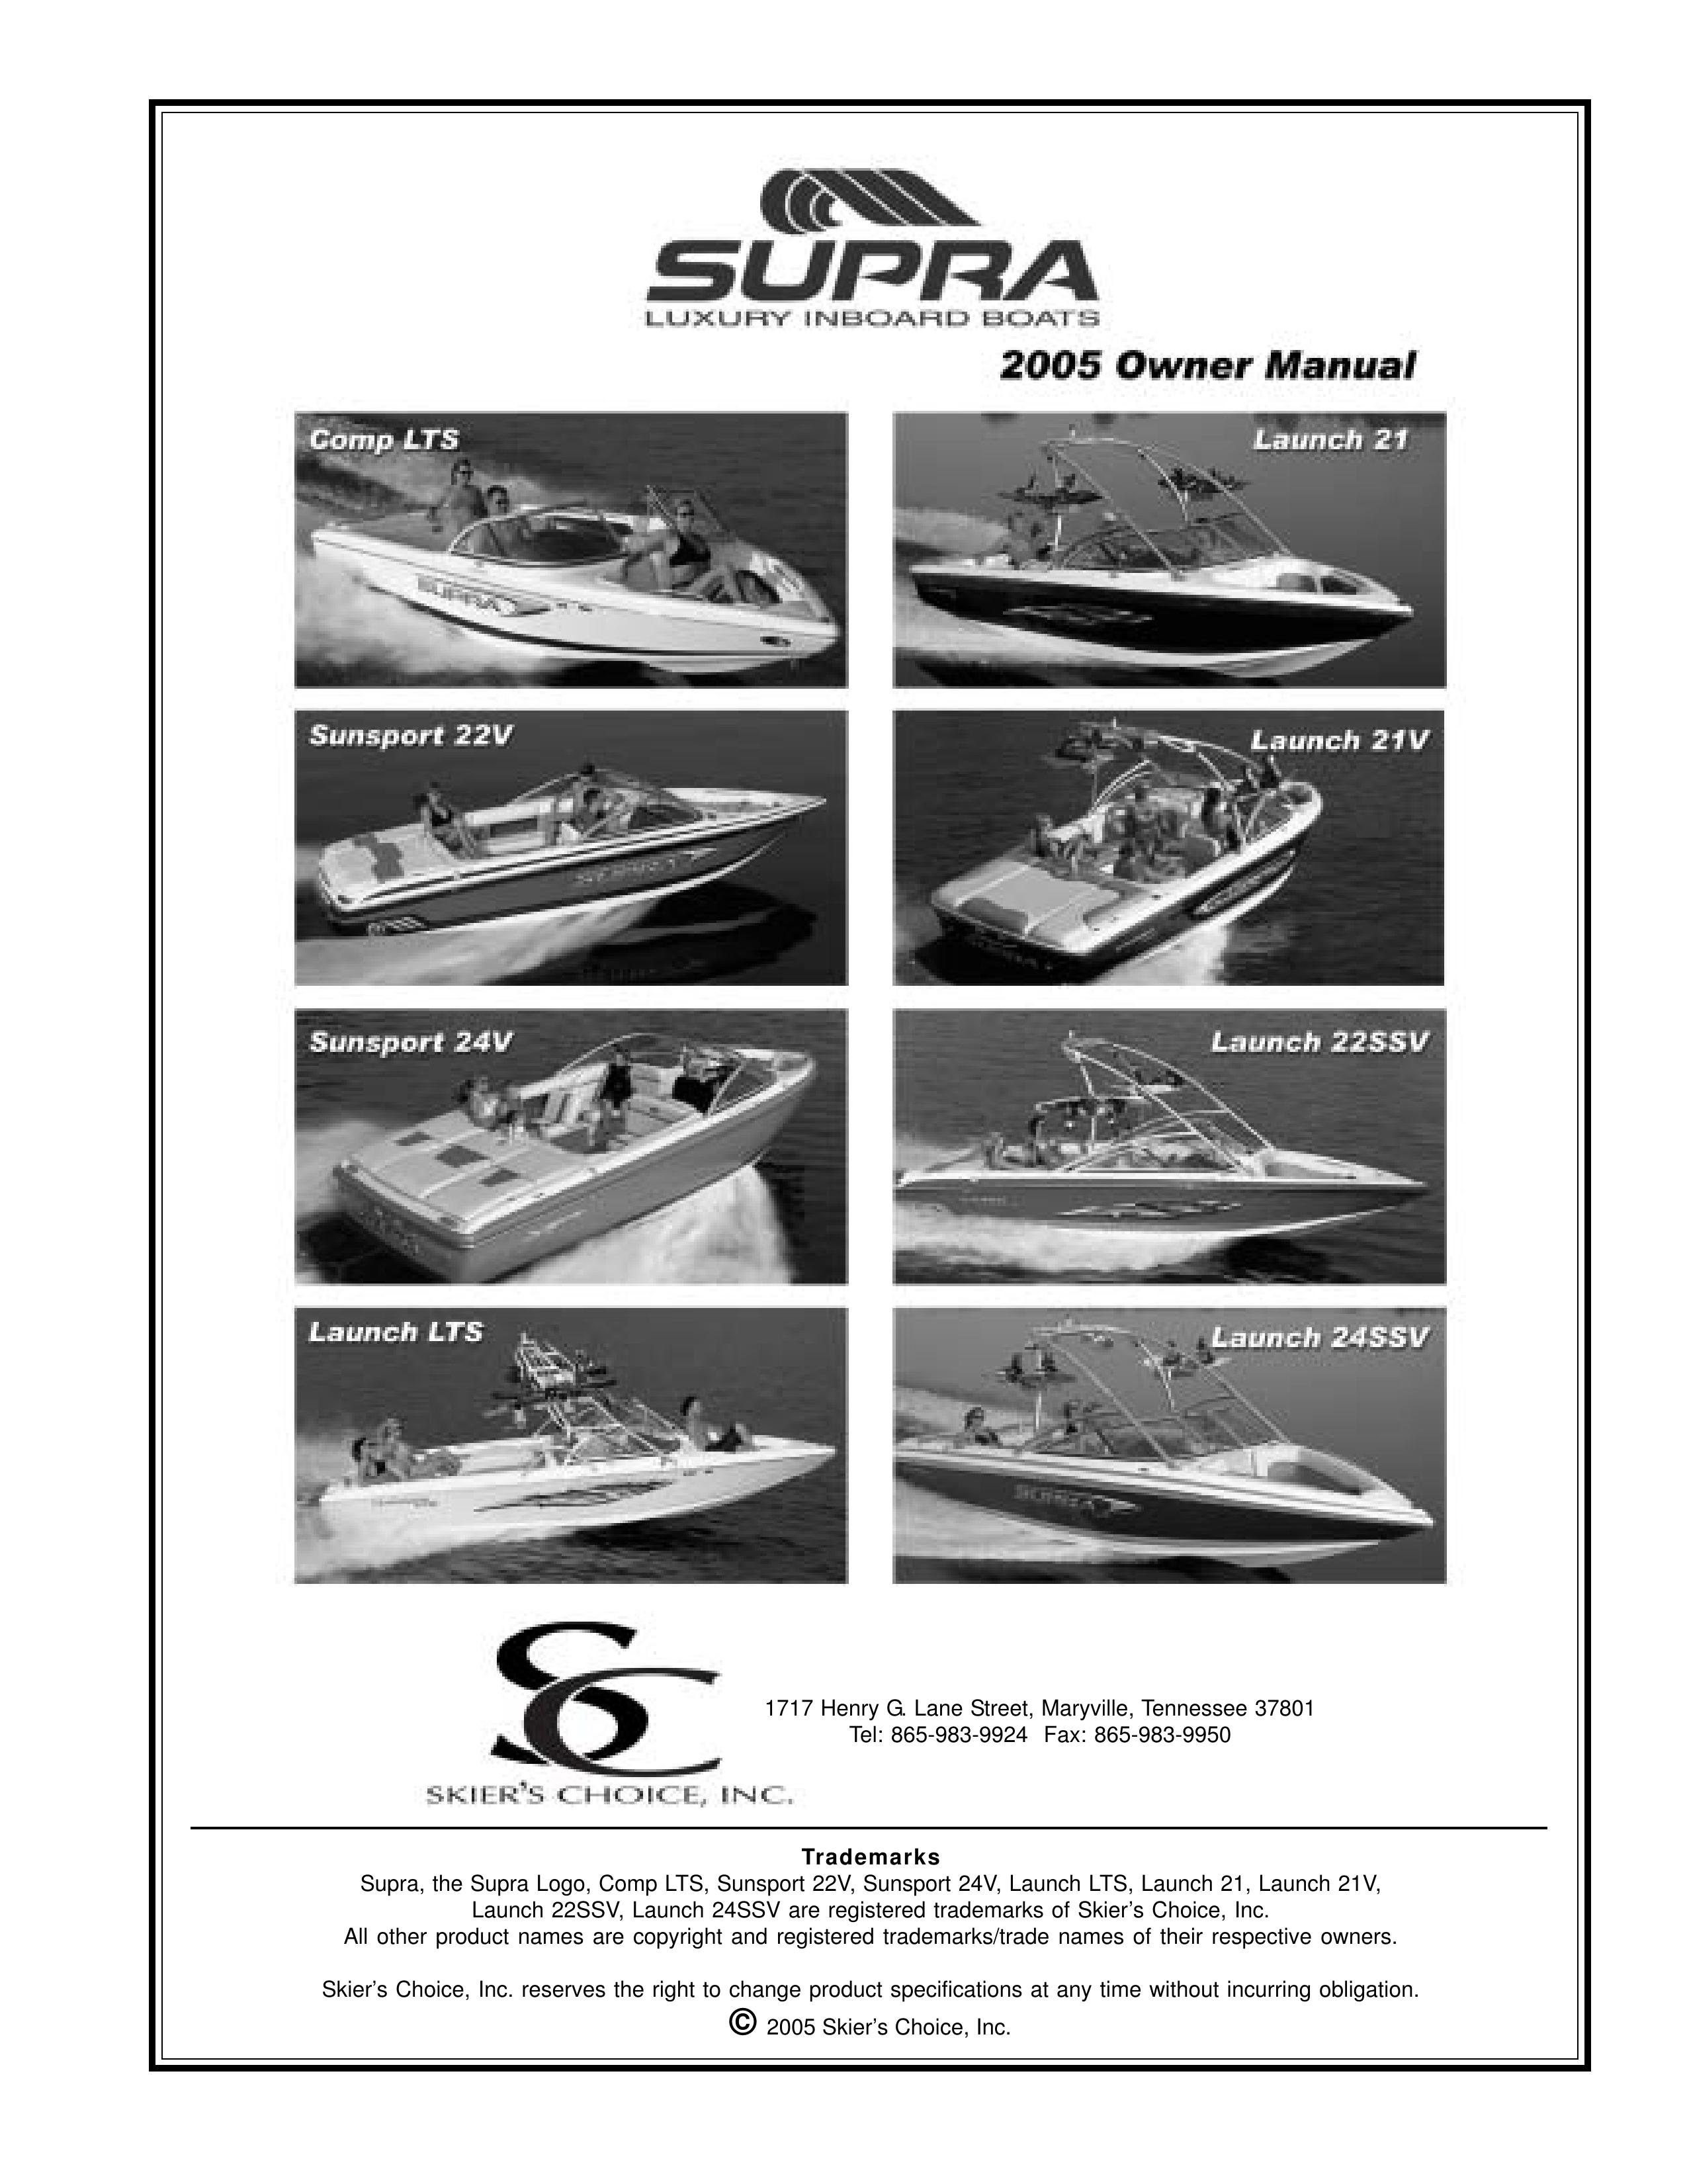 Supra LAUNCH 24SSV Boat User Manual